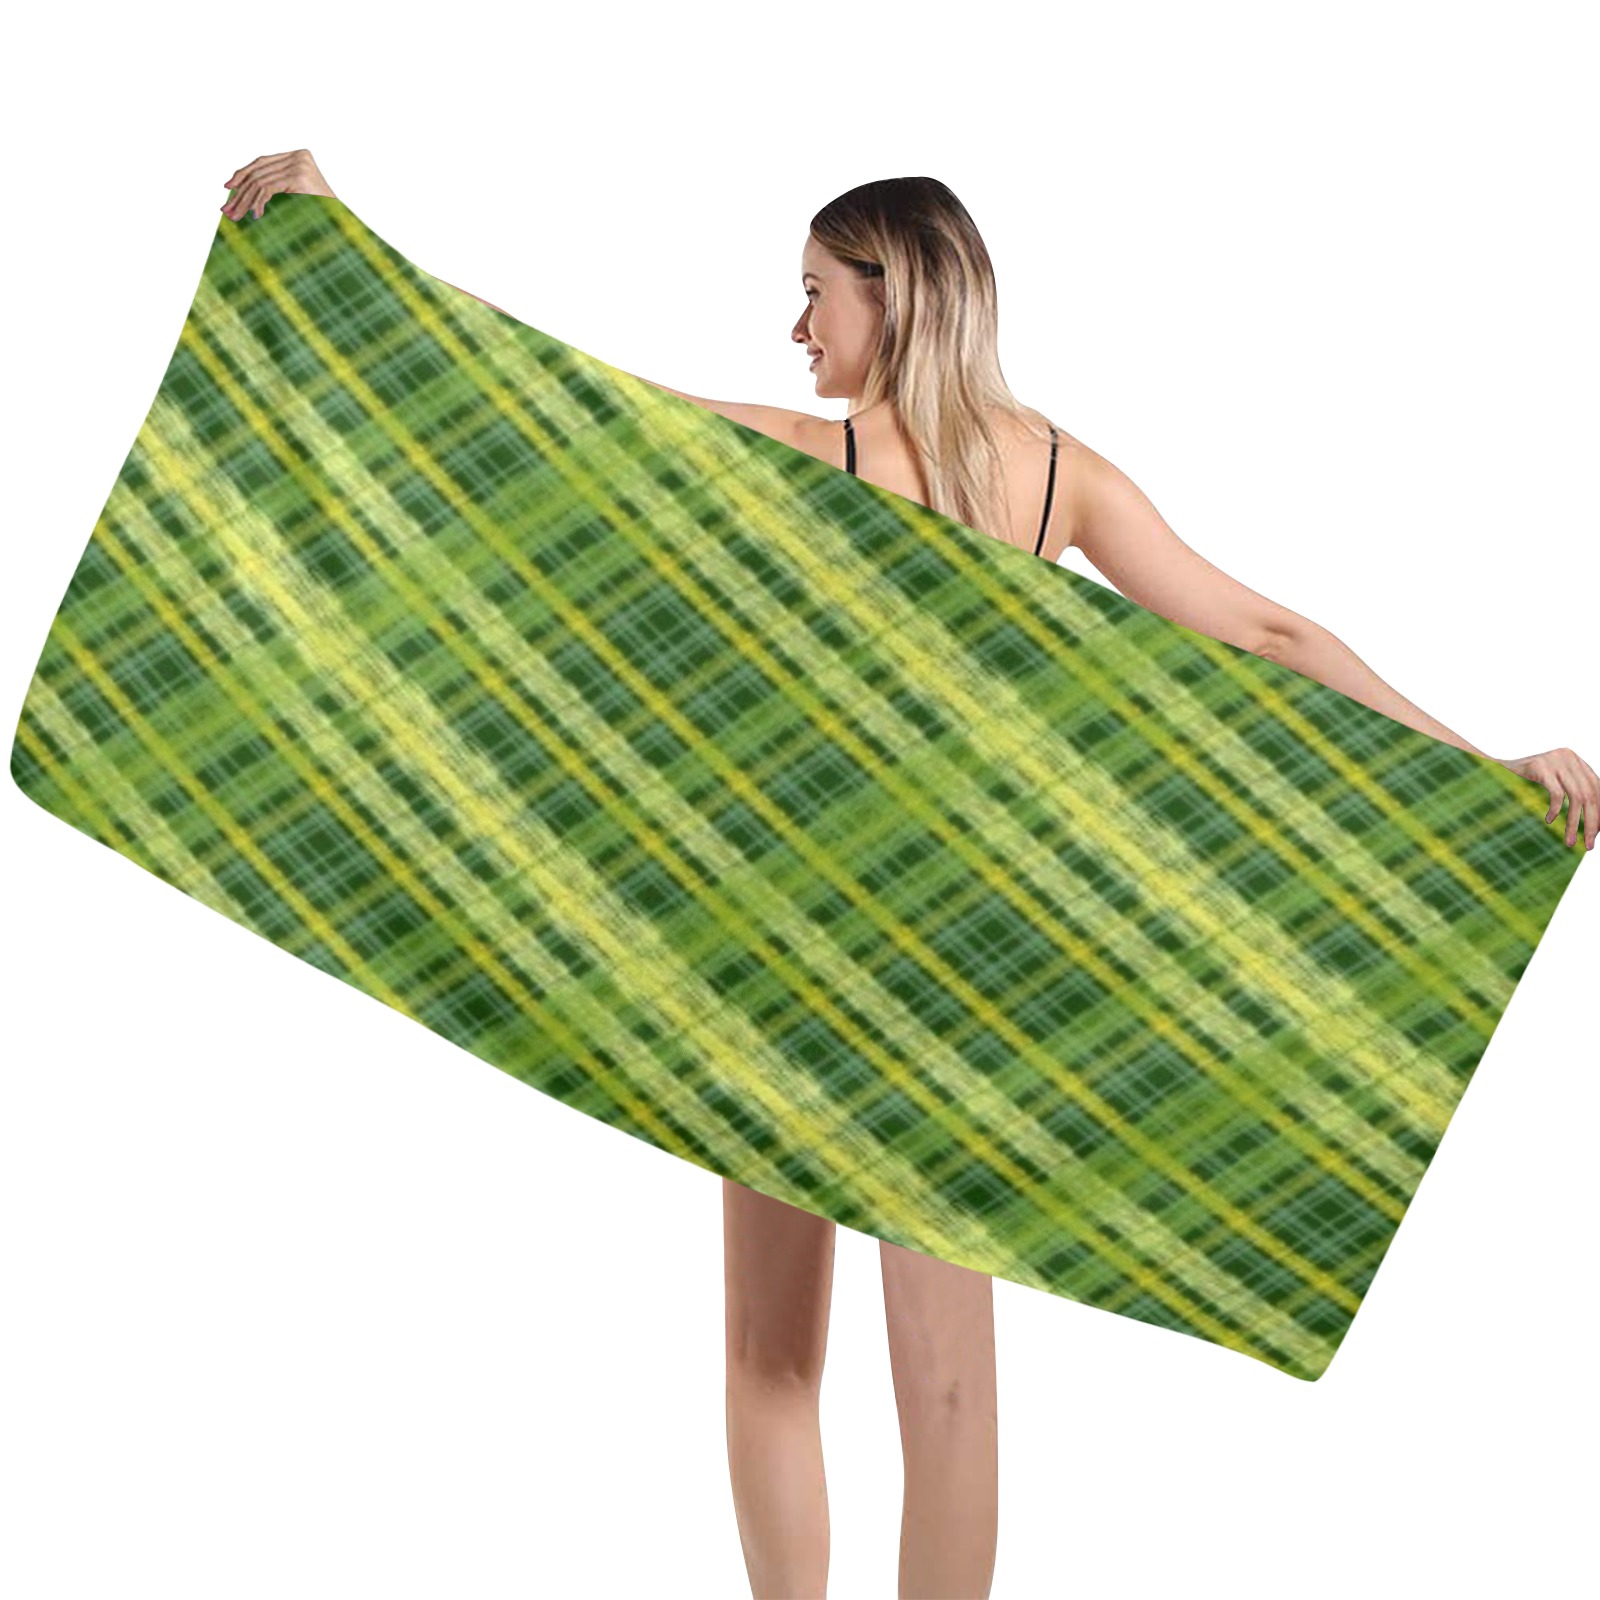 khan xanh Beach Towel 29"x58"(NEW)